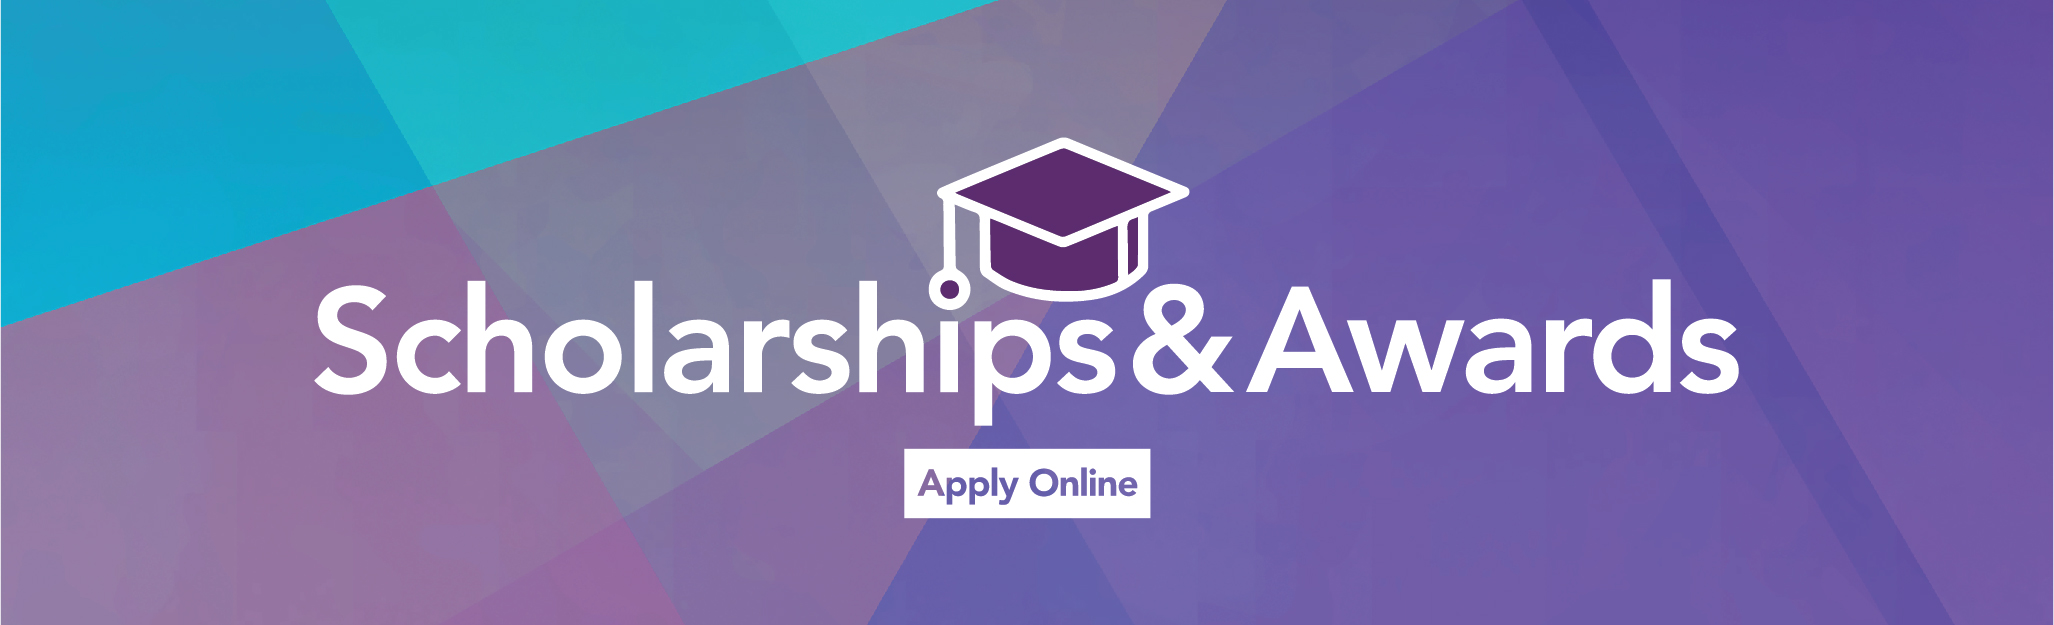 Scholarships Bursaries and Awards - banner